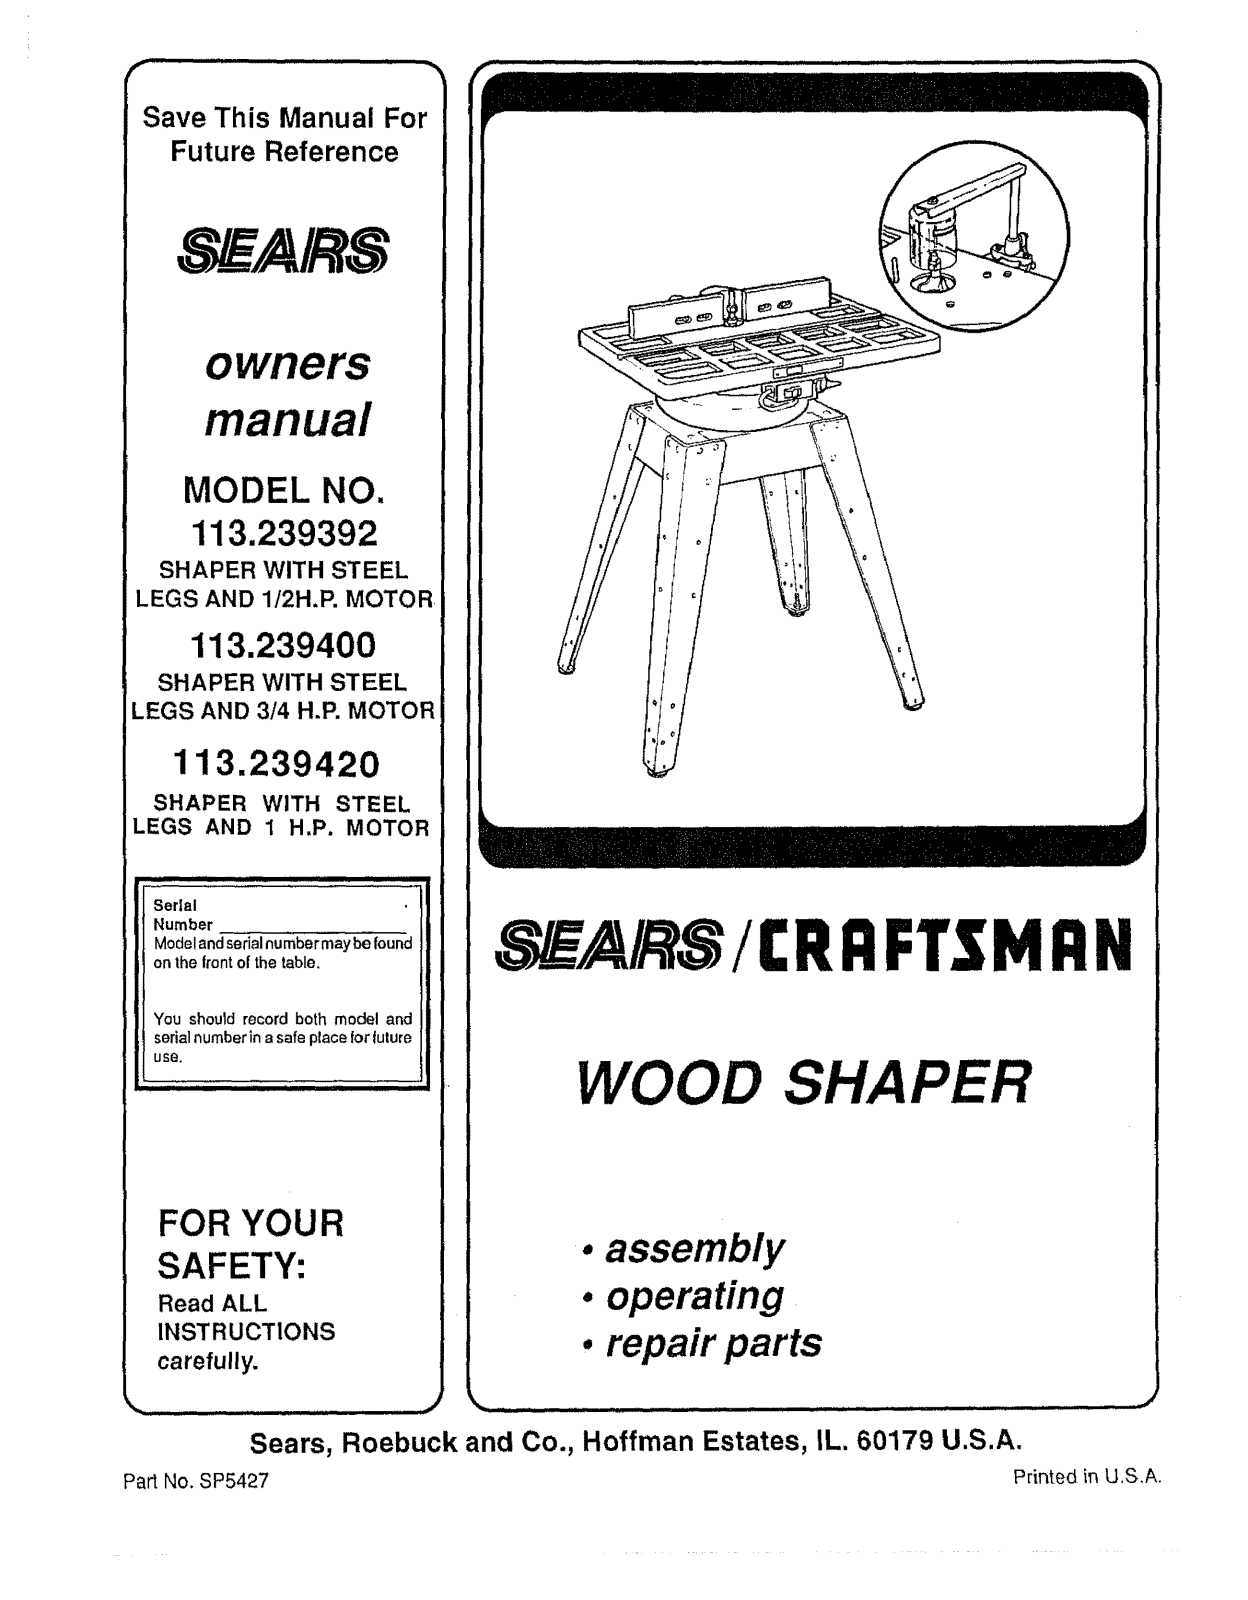 Craftsman 113239420, 113239400, 113239392 Owner’s Manual